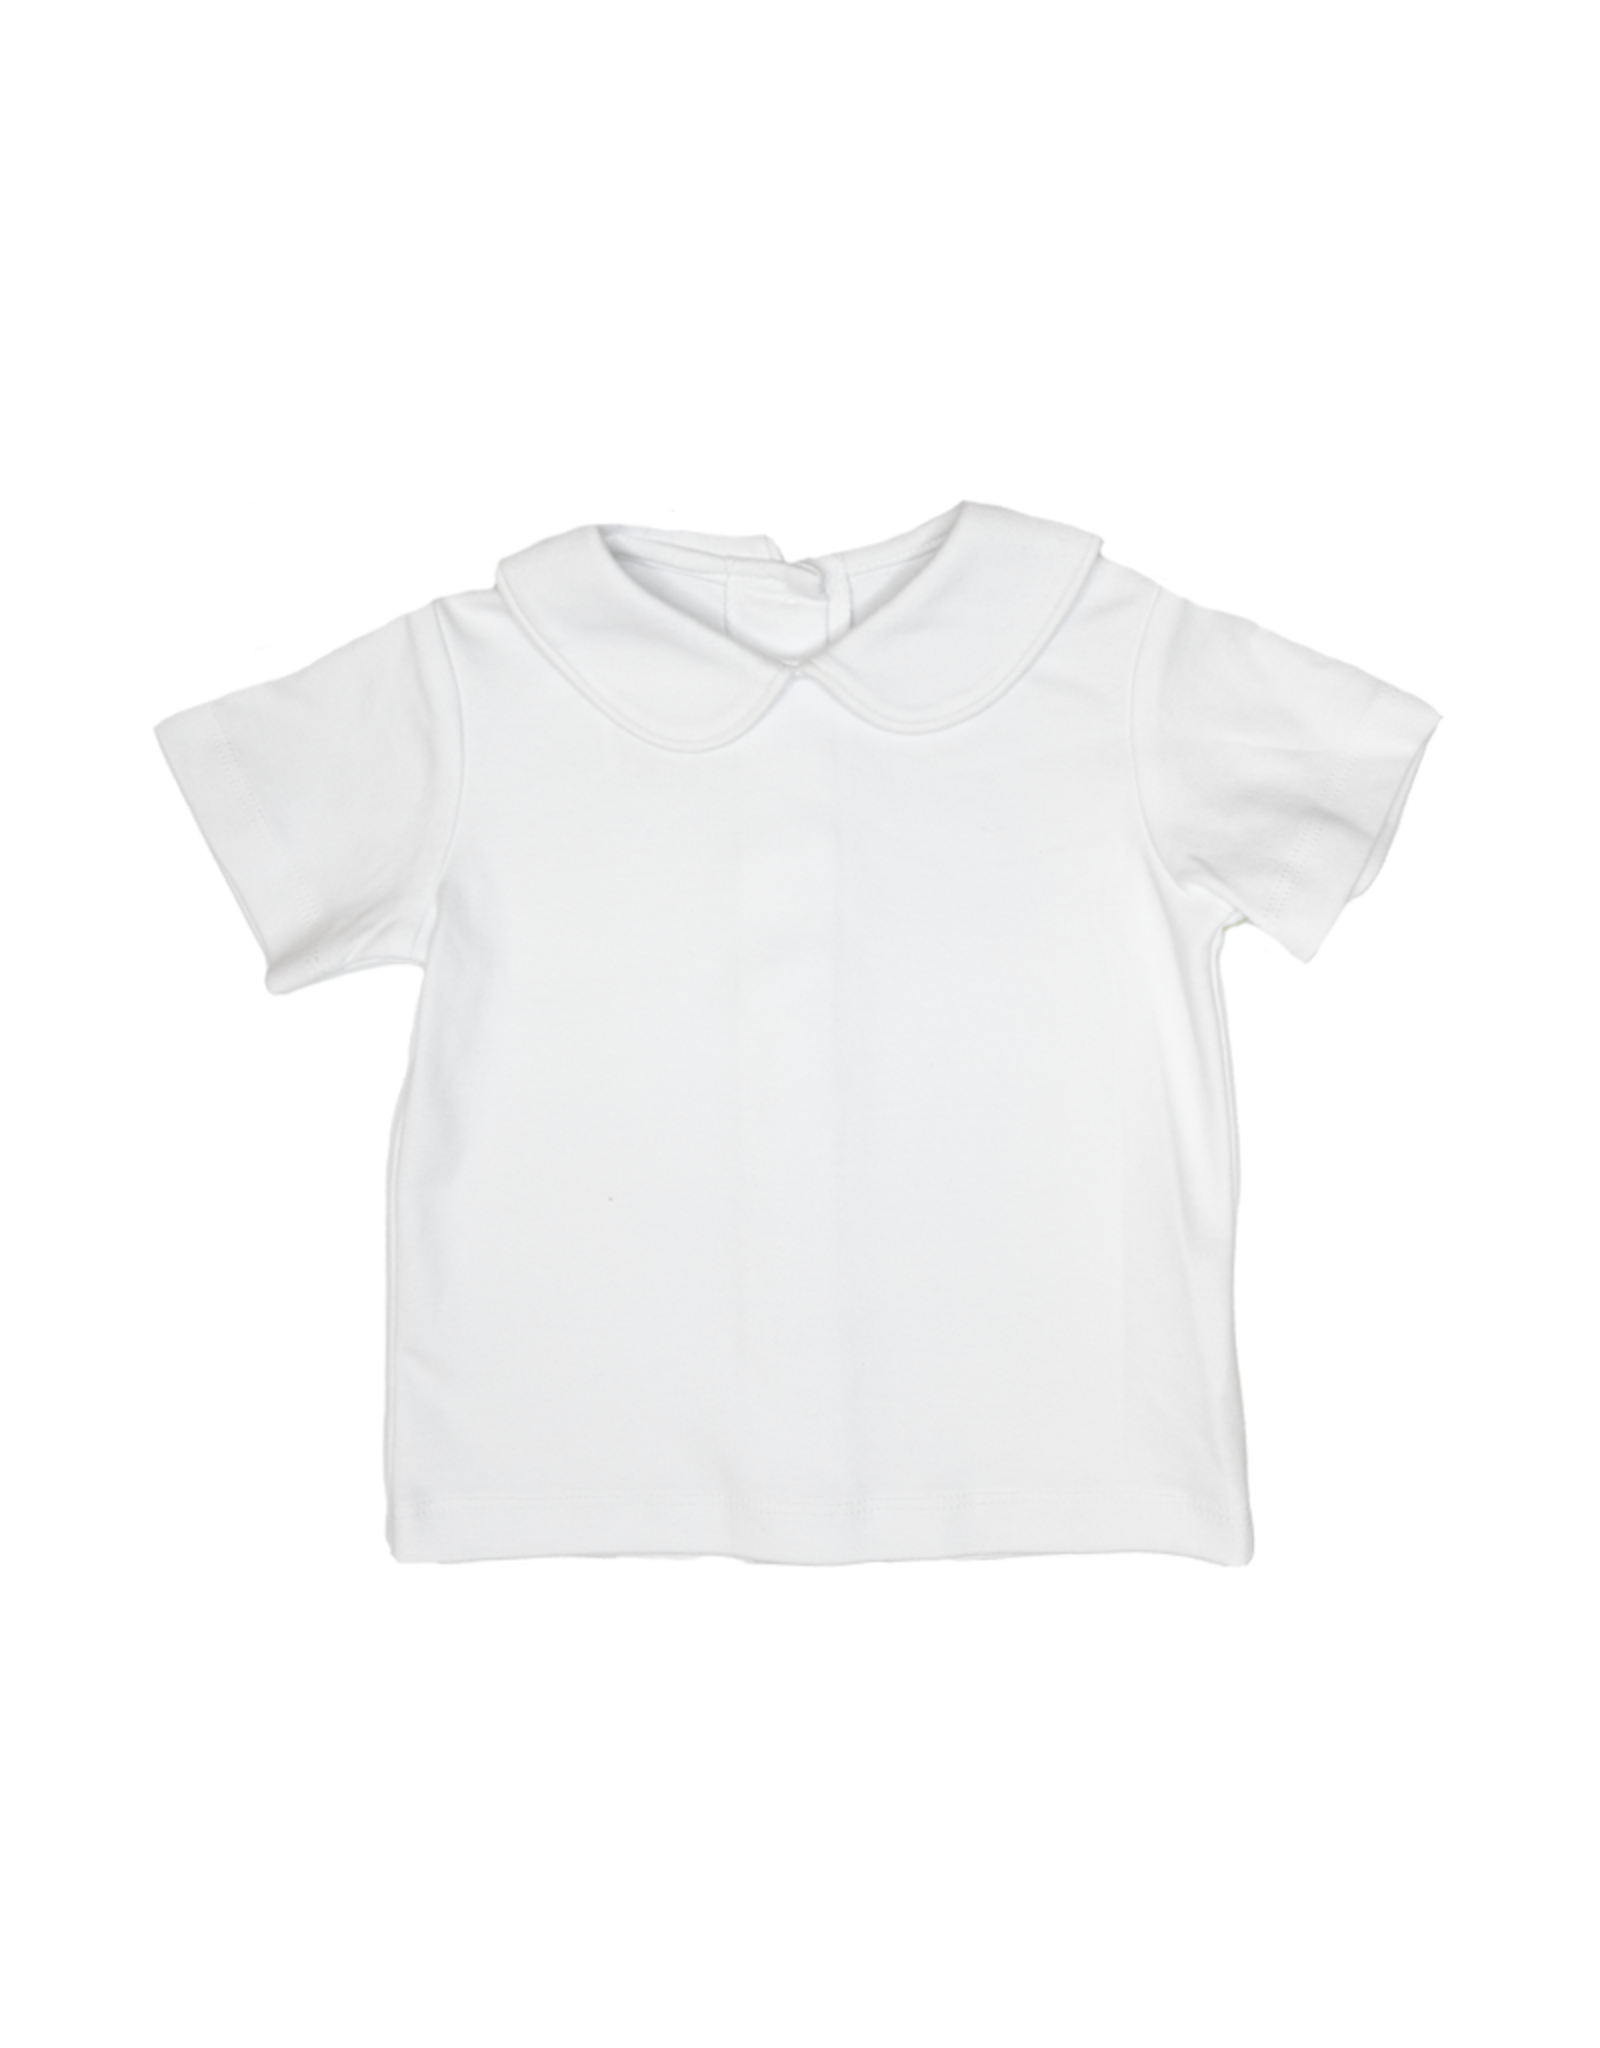 Zuccini ZMS23 White Peter Pan Knit Shirt